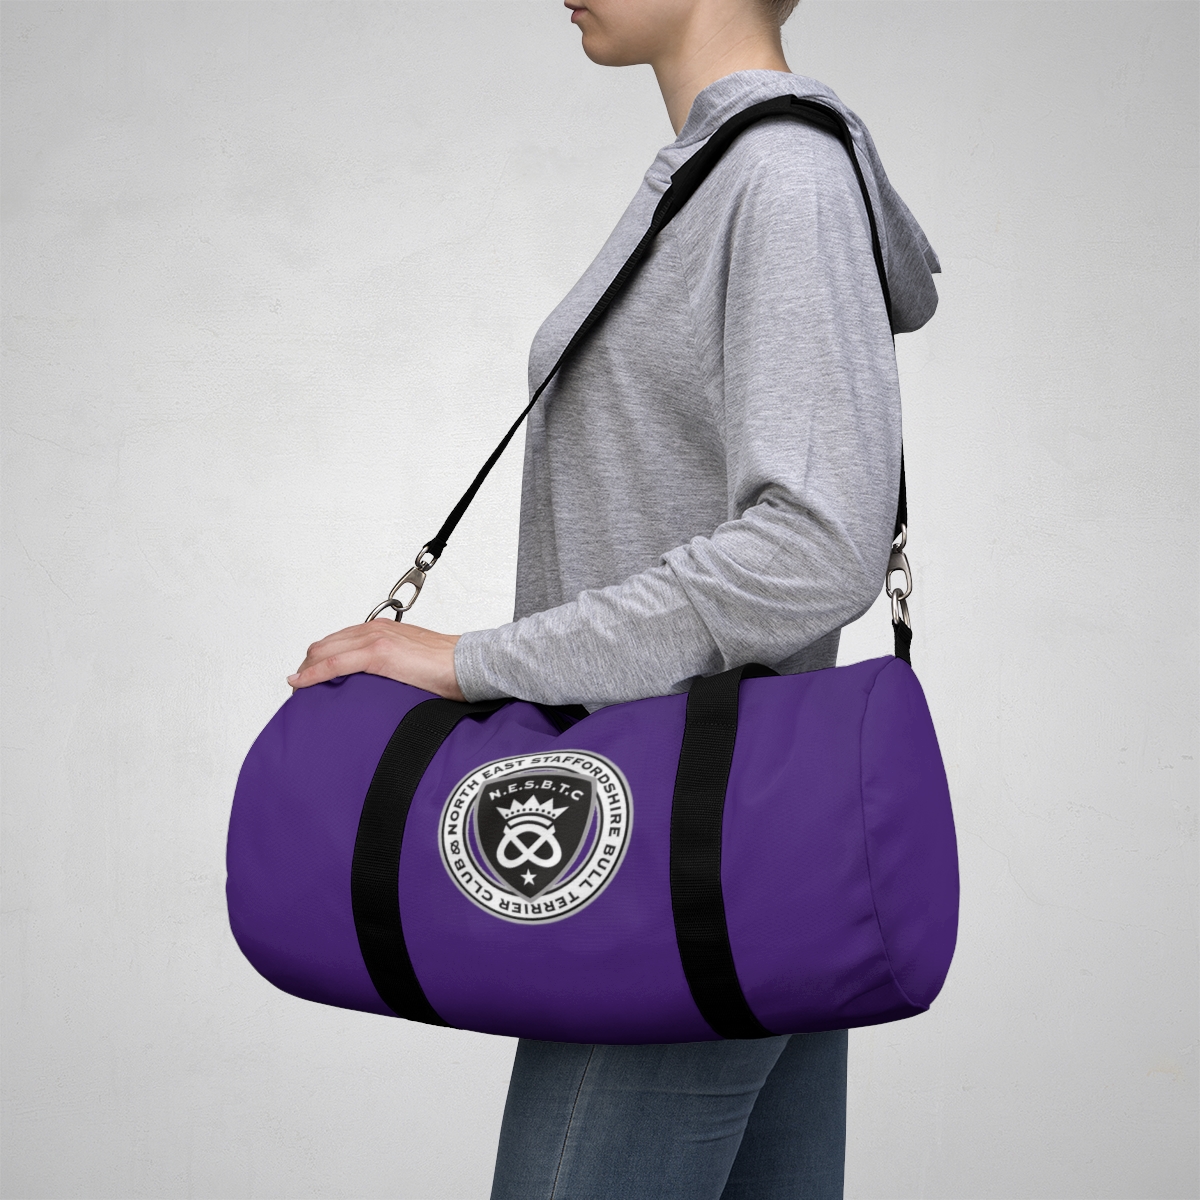 NESBTC Purple Duffel Bag